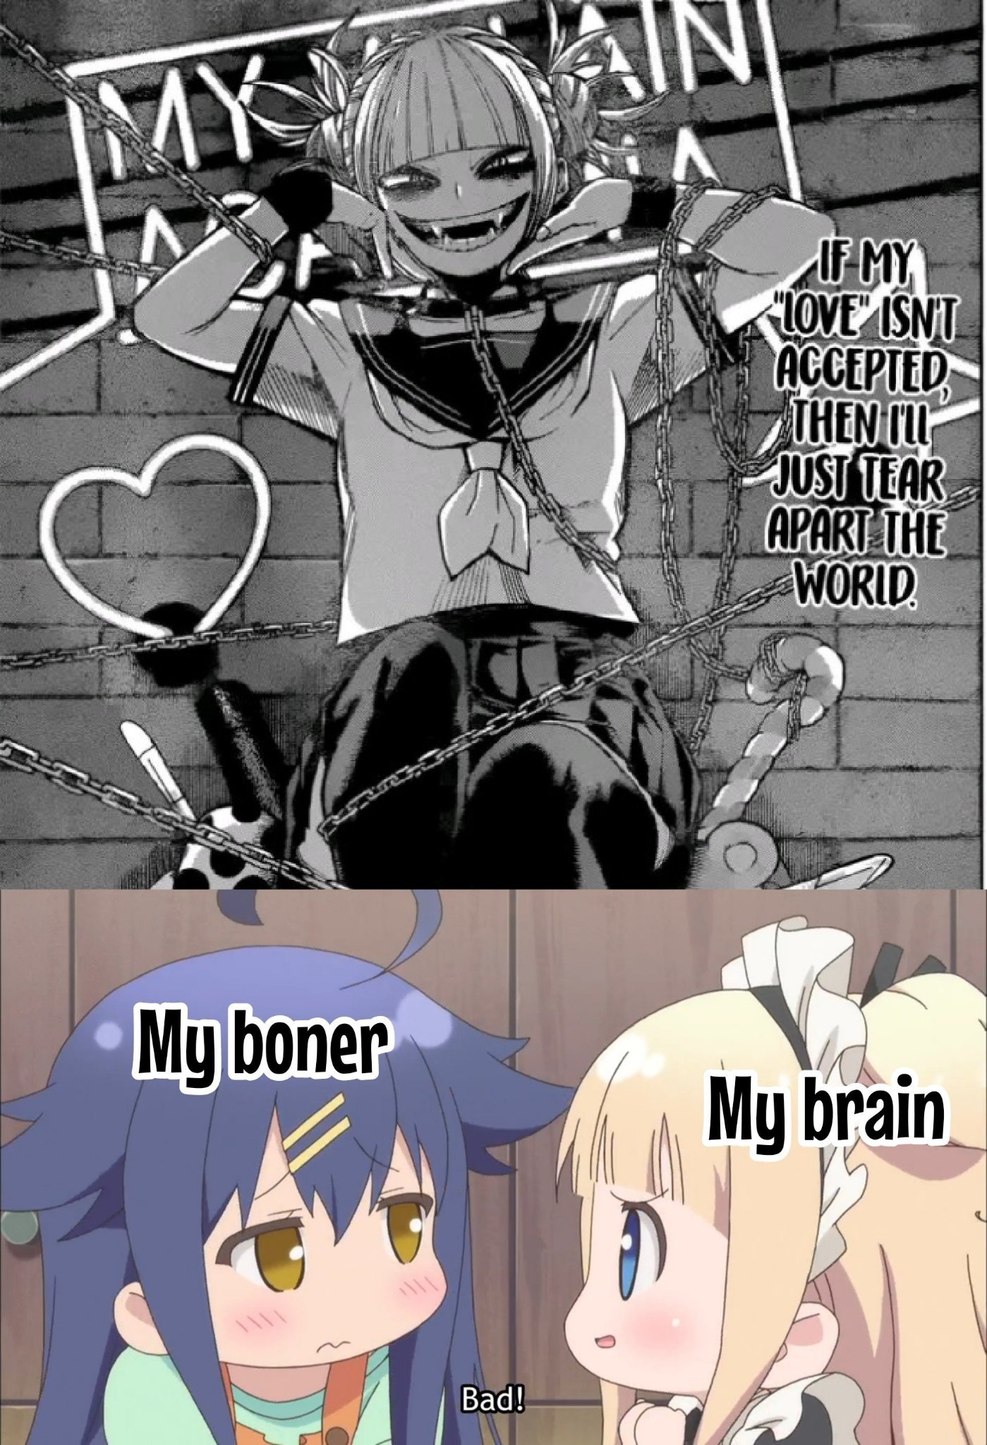 anime meme  Anime memes, Anime, Memes